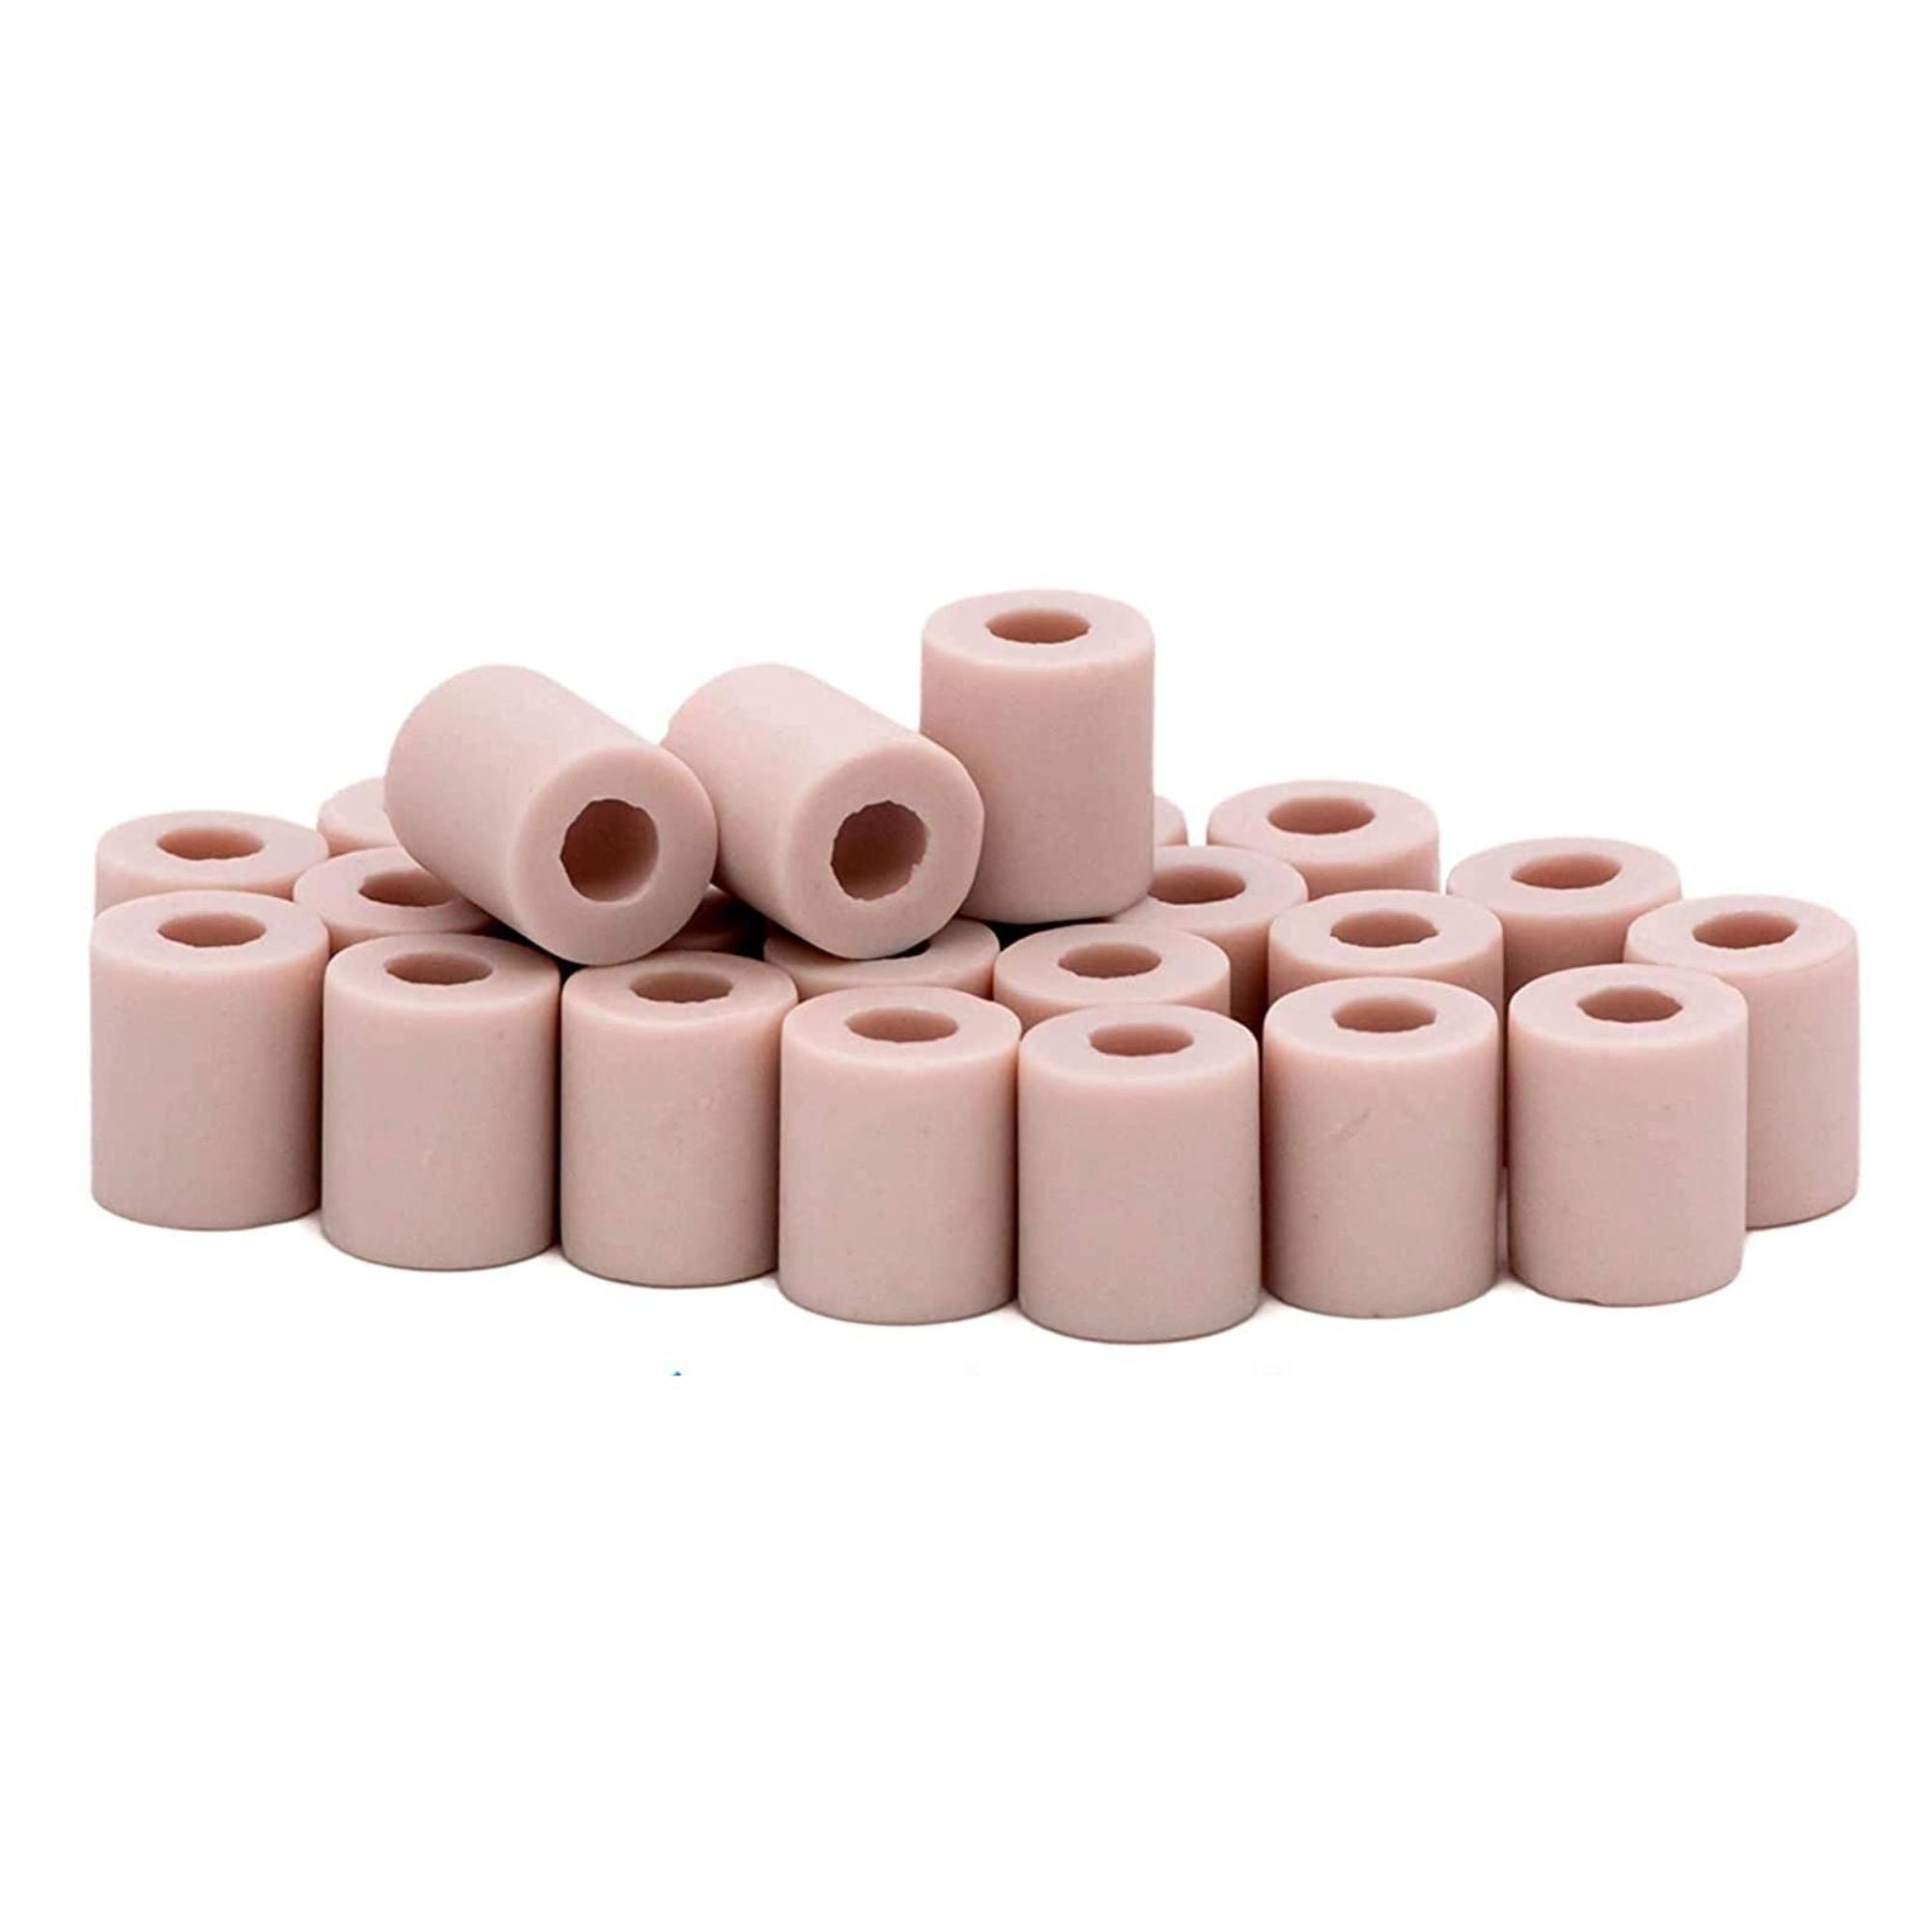 Lot de perles de céramique rose EM® - Filtre l'eau